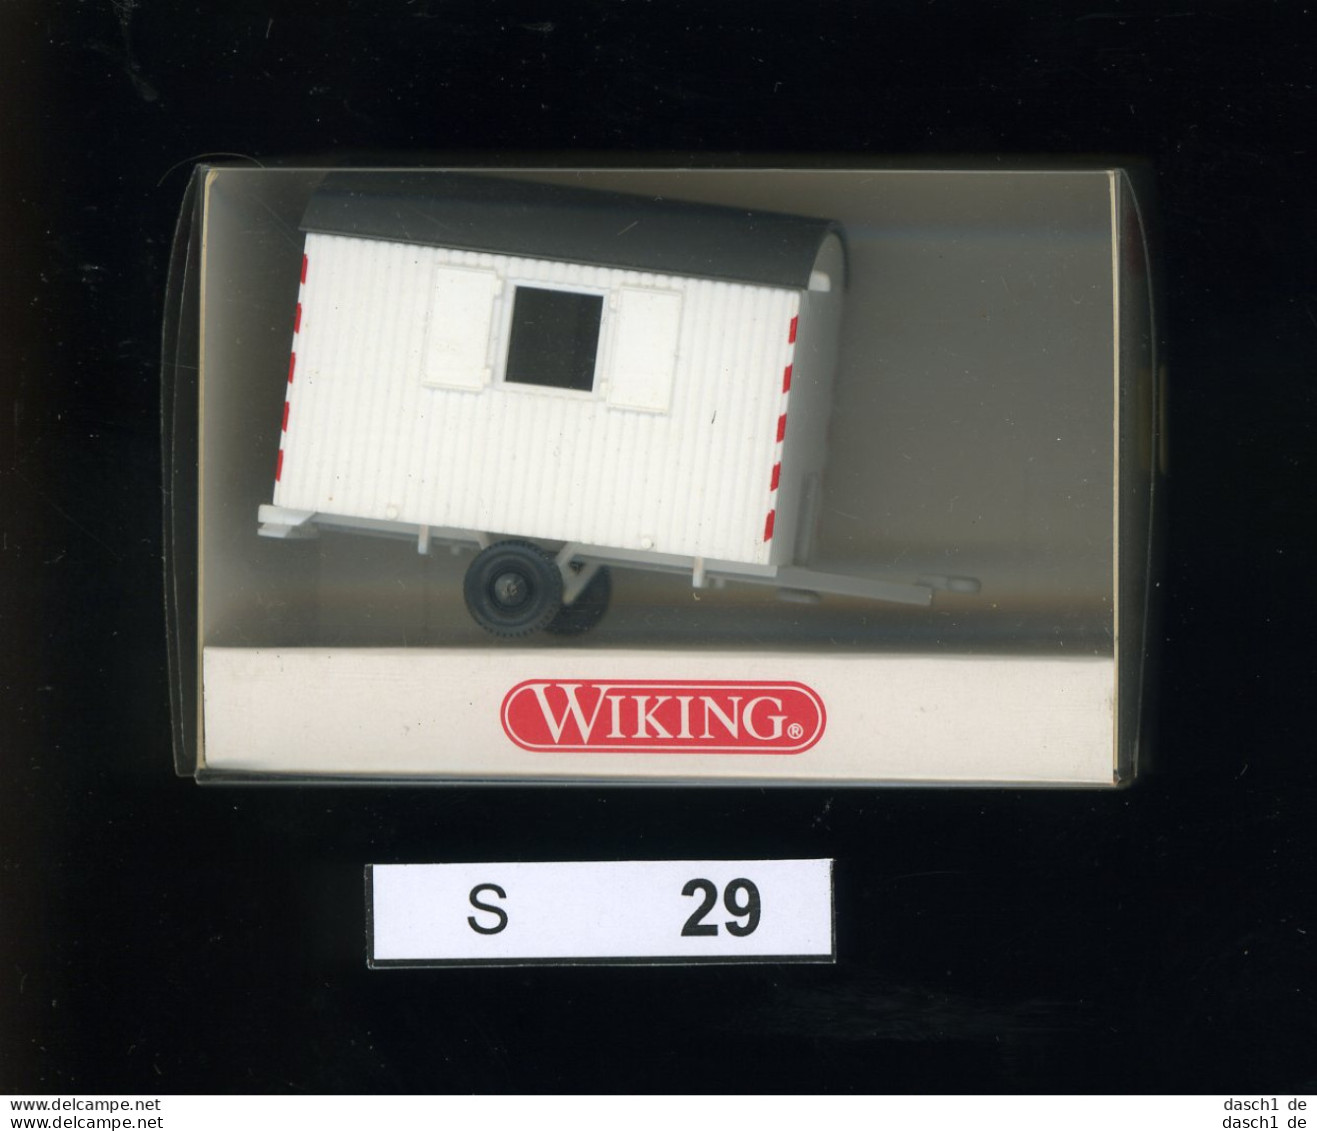 S029, 1:87, Wiking, Bauwagen, Modell 656 01 18 - Baanvoertuigen